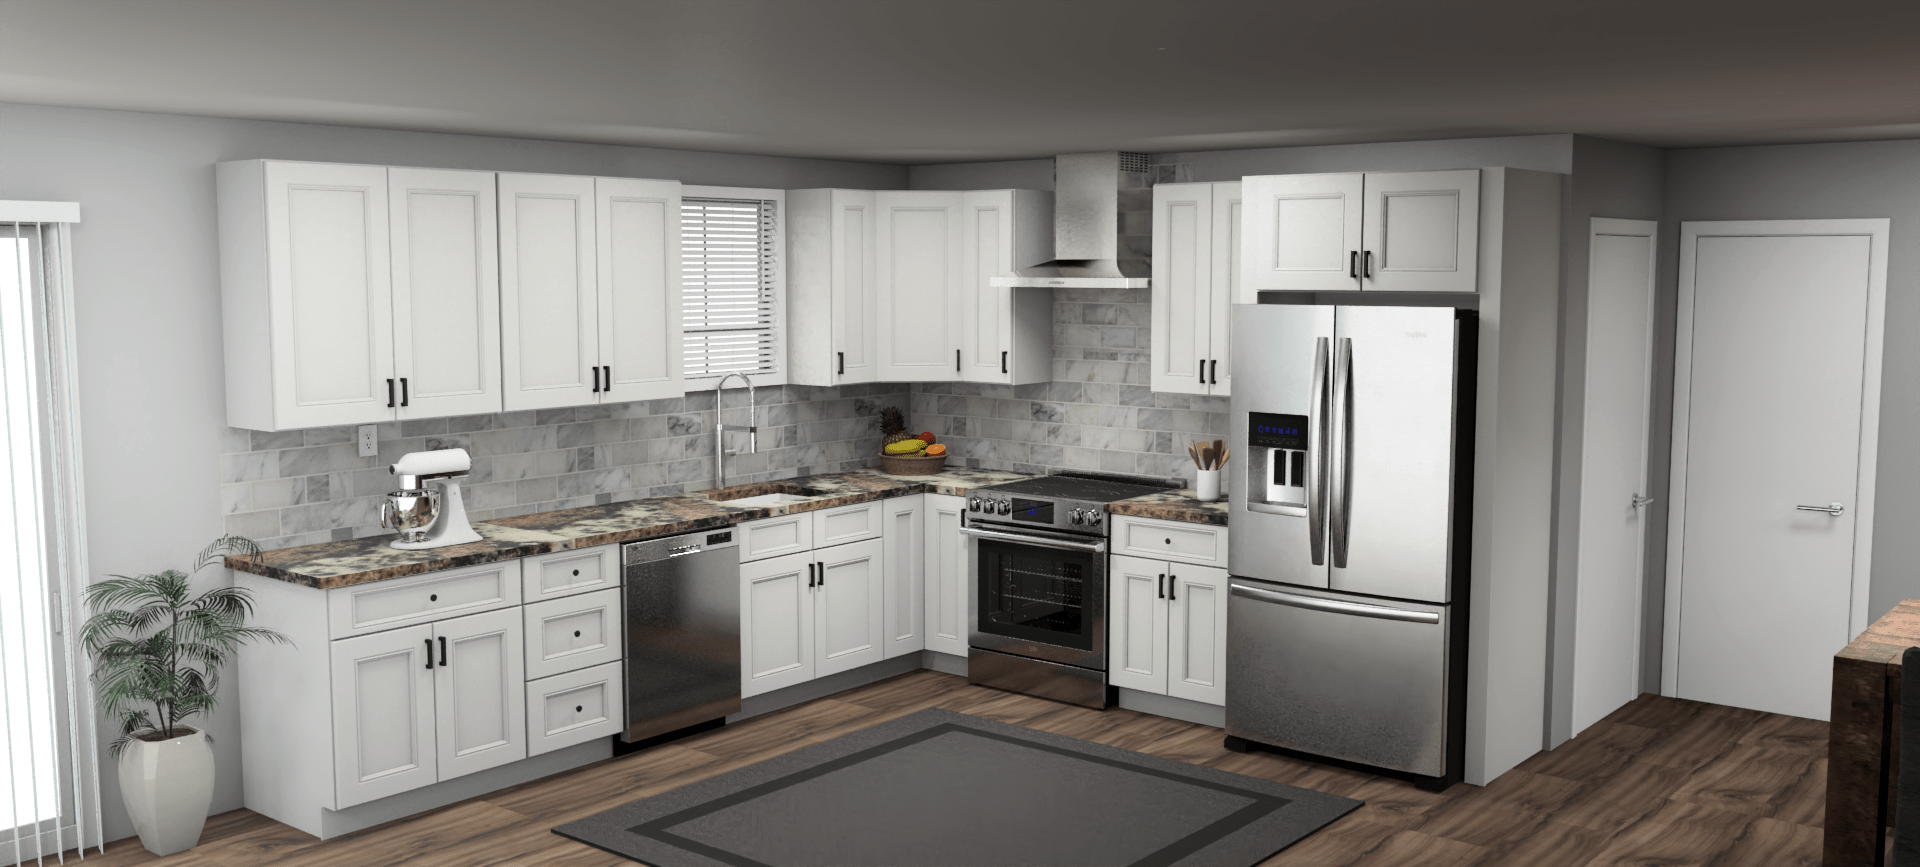 Fabuwood Allure Nexus Frost 12 x 11 L Shaped Kitchen Main Layout Photo